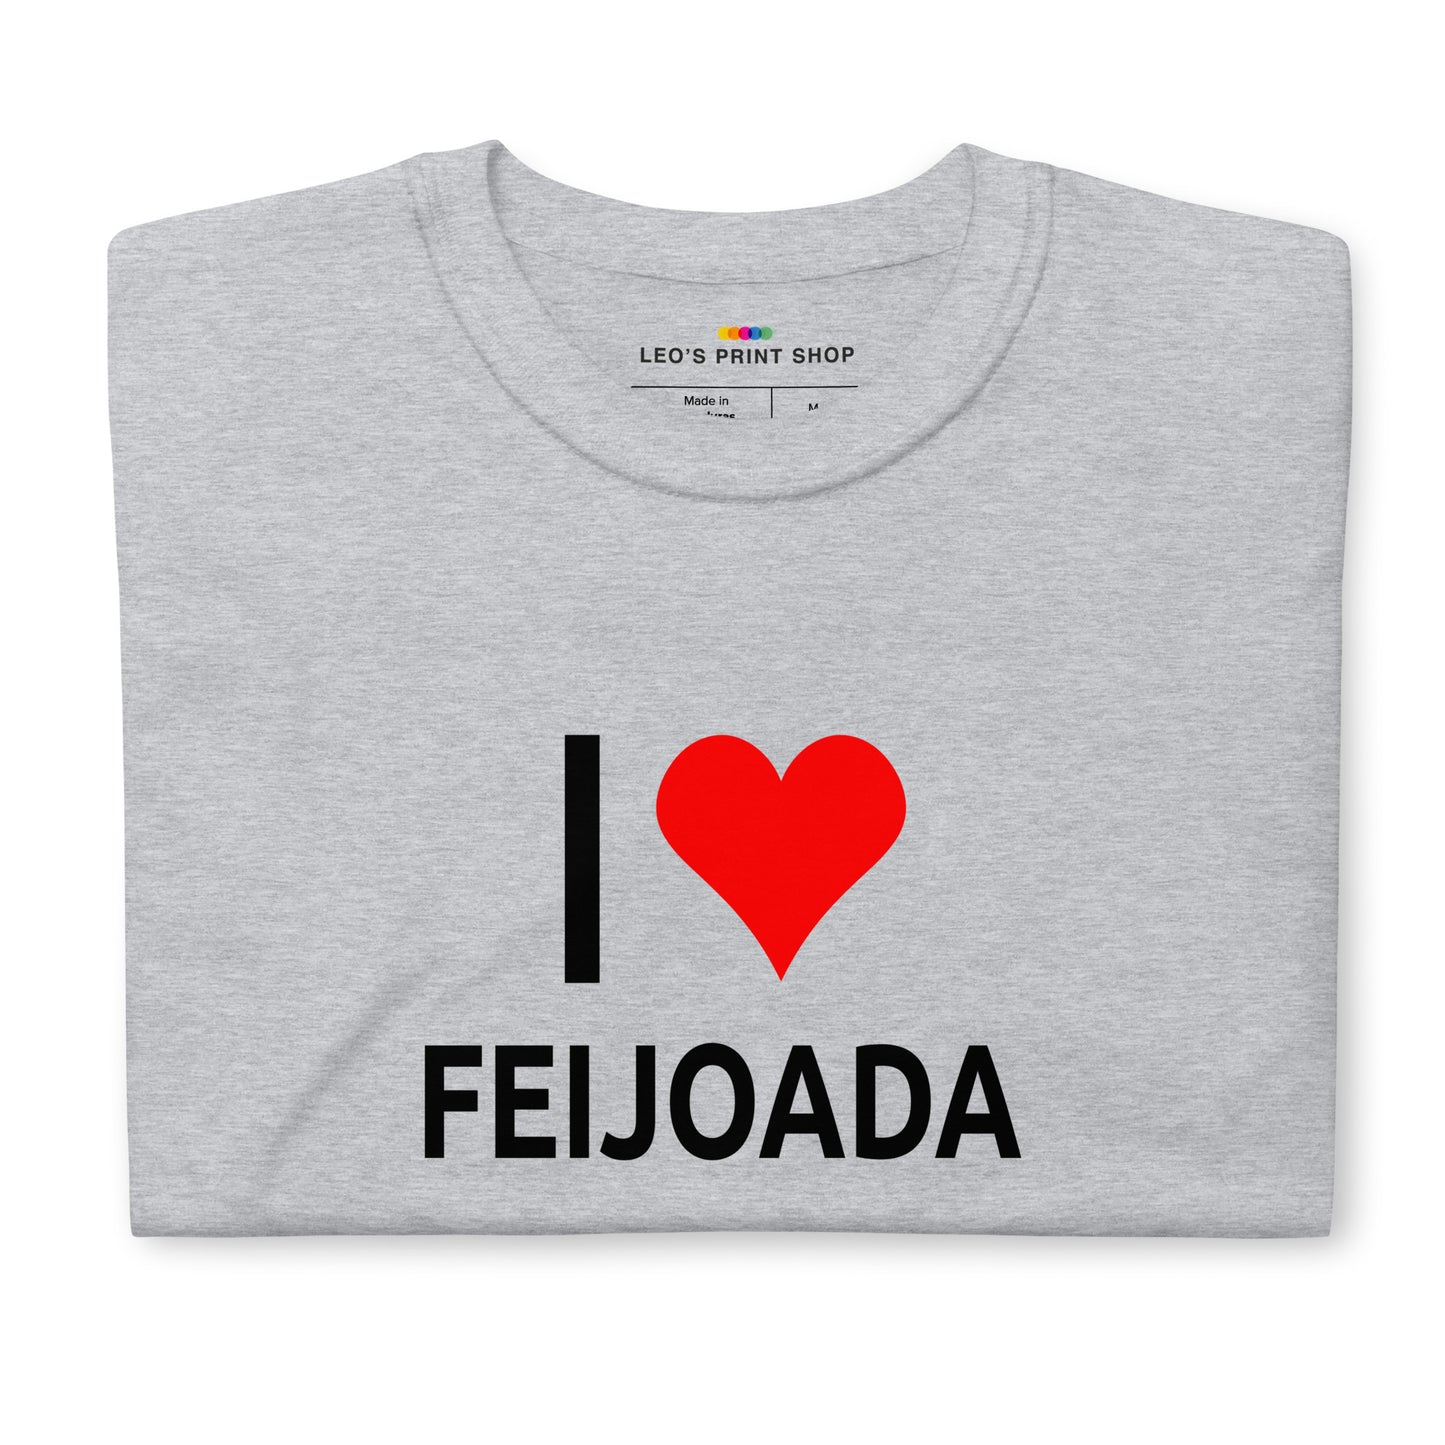 Camiseta brasileña divertida "I LOVE FEIJOADA"  regalo camiseta fans comida brasileña